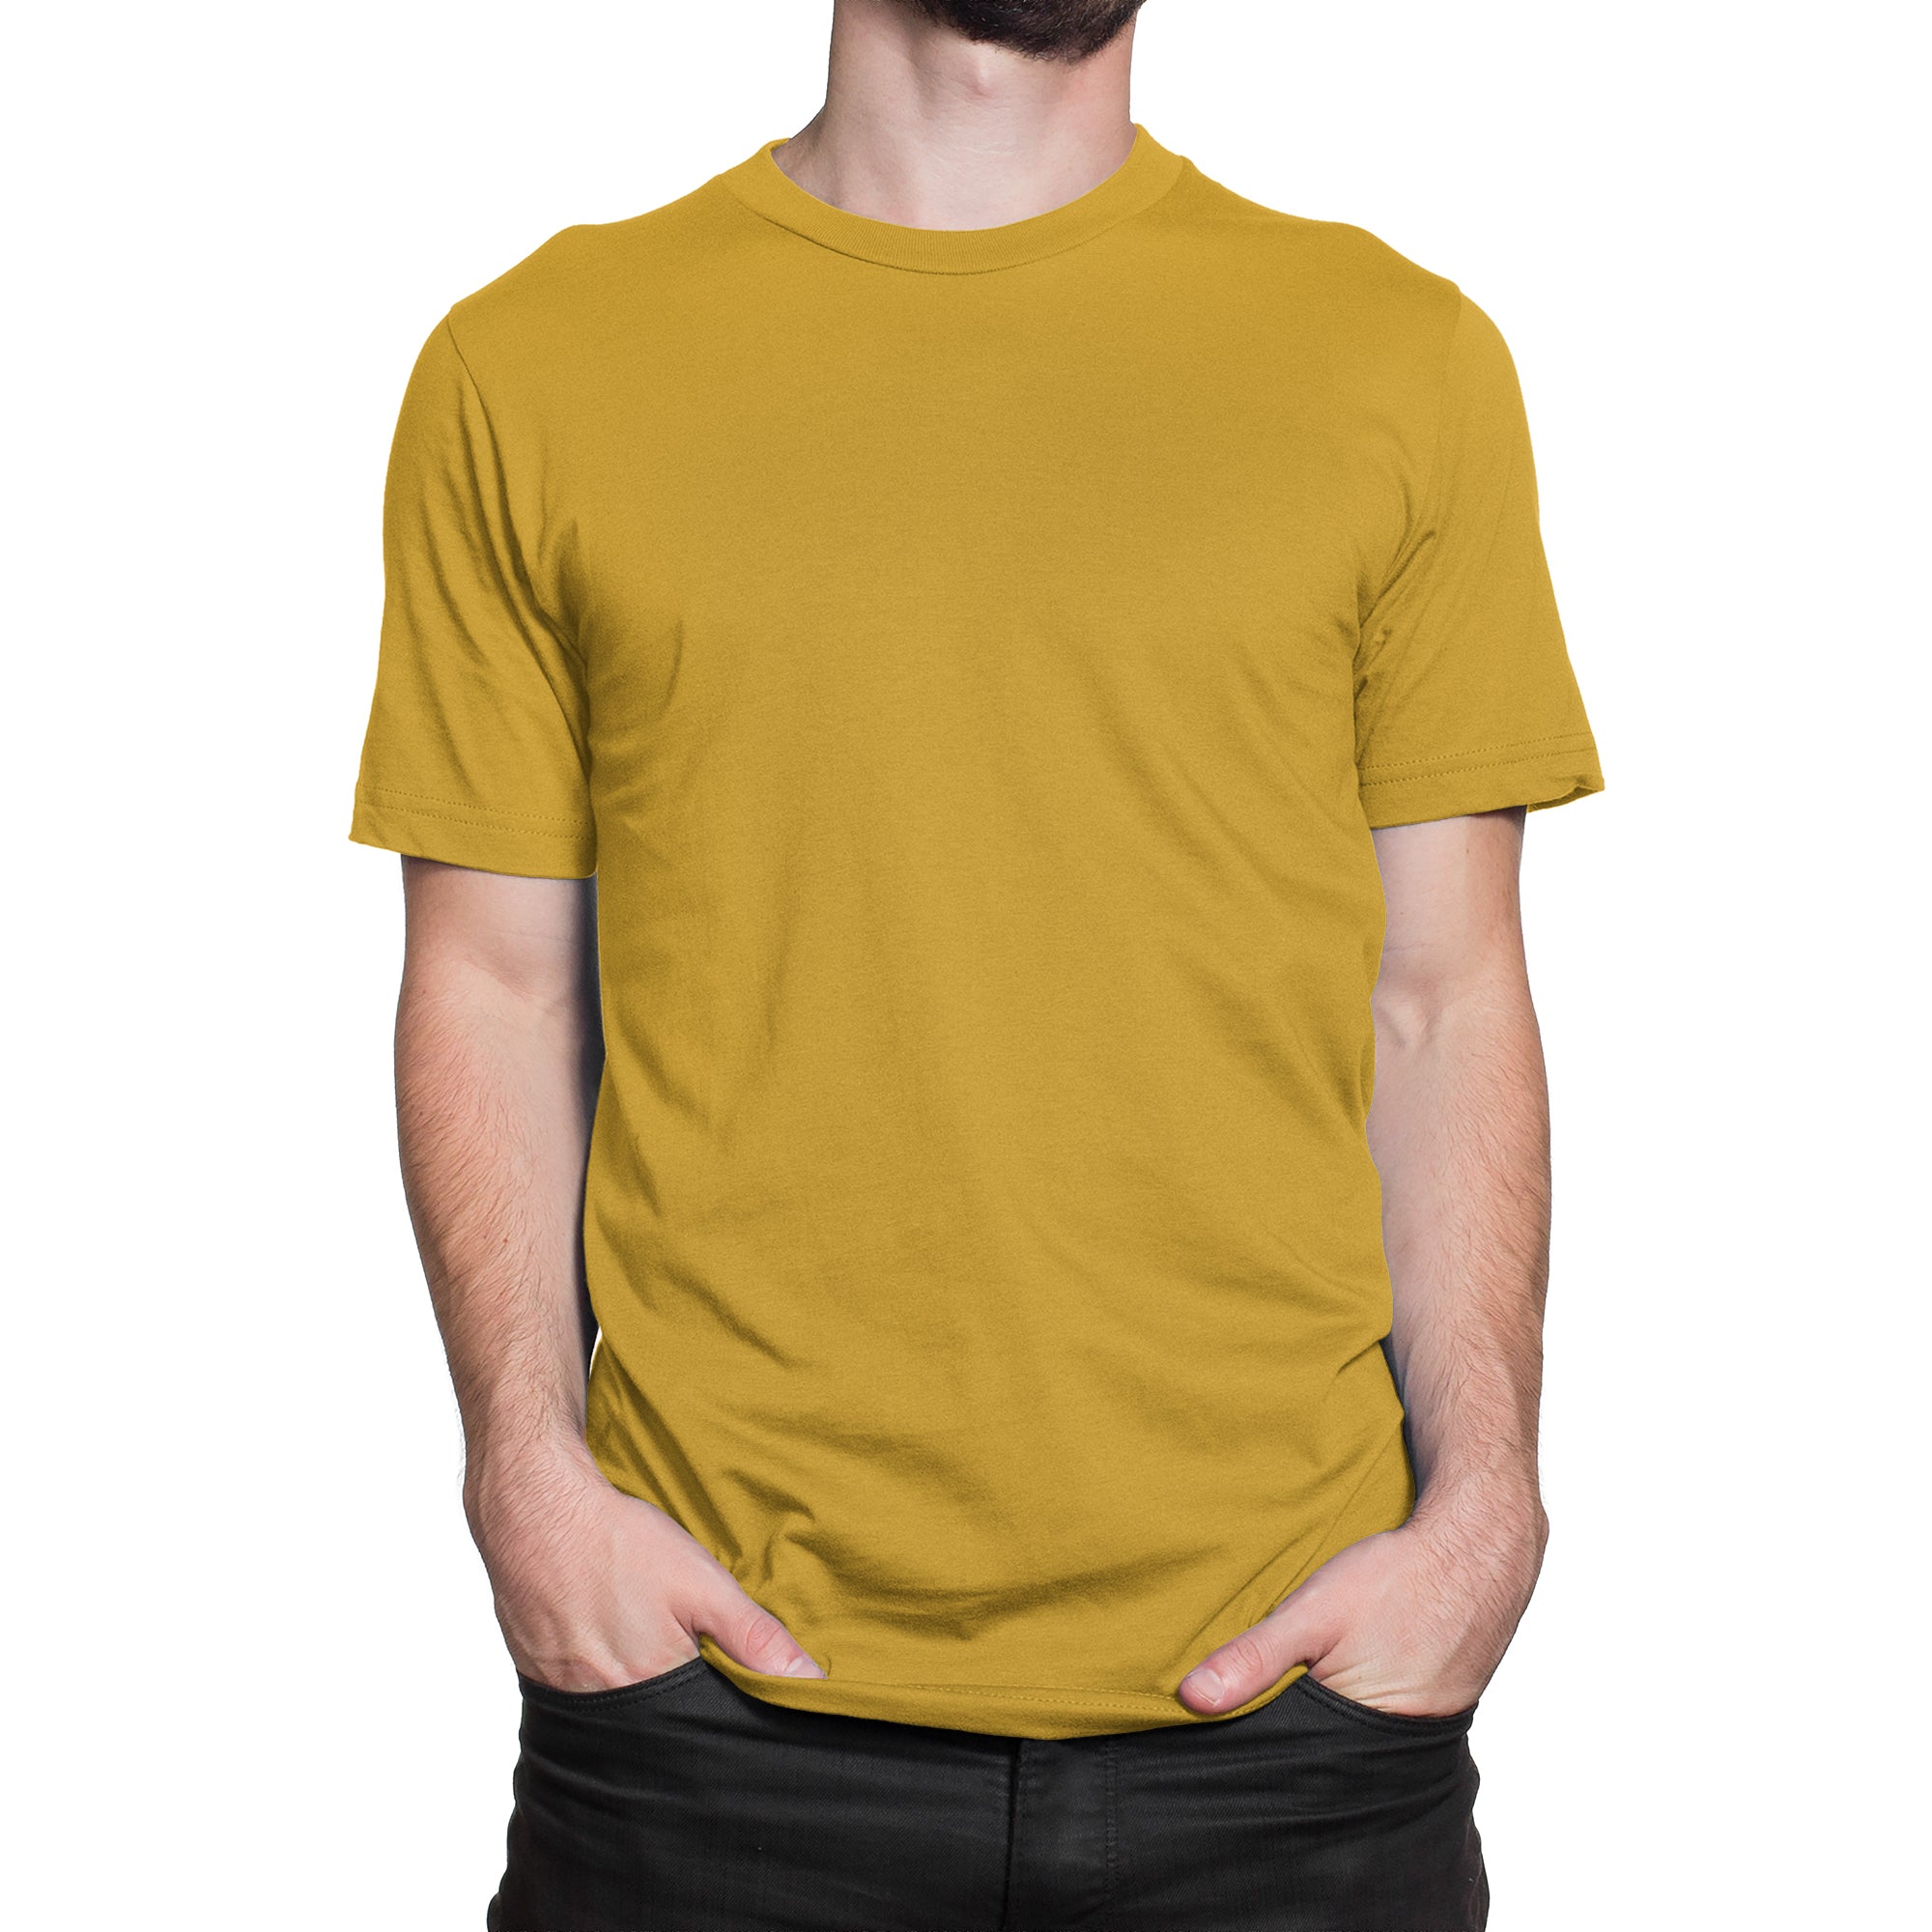 Buy Mustard Yellow t-Shirt for Men online in India – Wolfattire